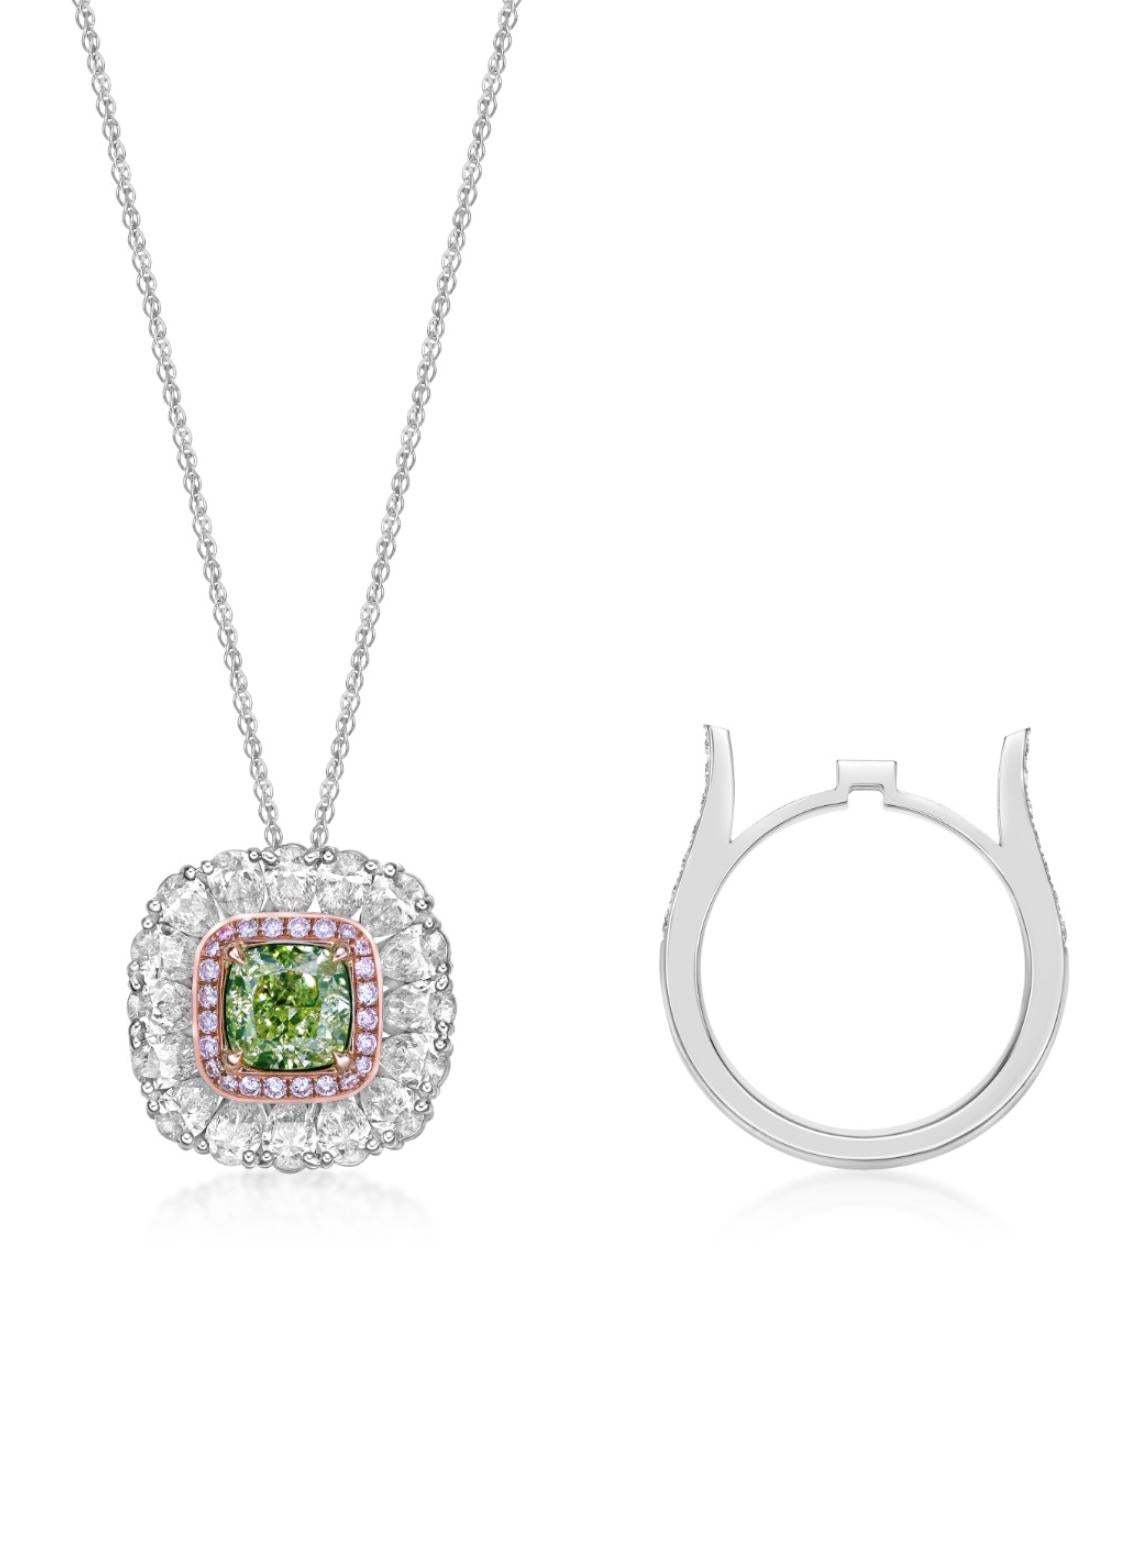 Emilio Jewelry Gia Certified 3.95 Carat Fancy Yellow Green Diamond Ring